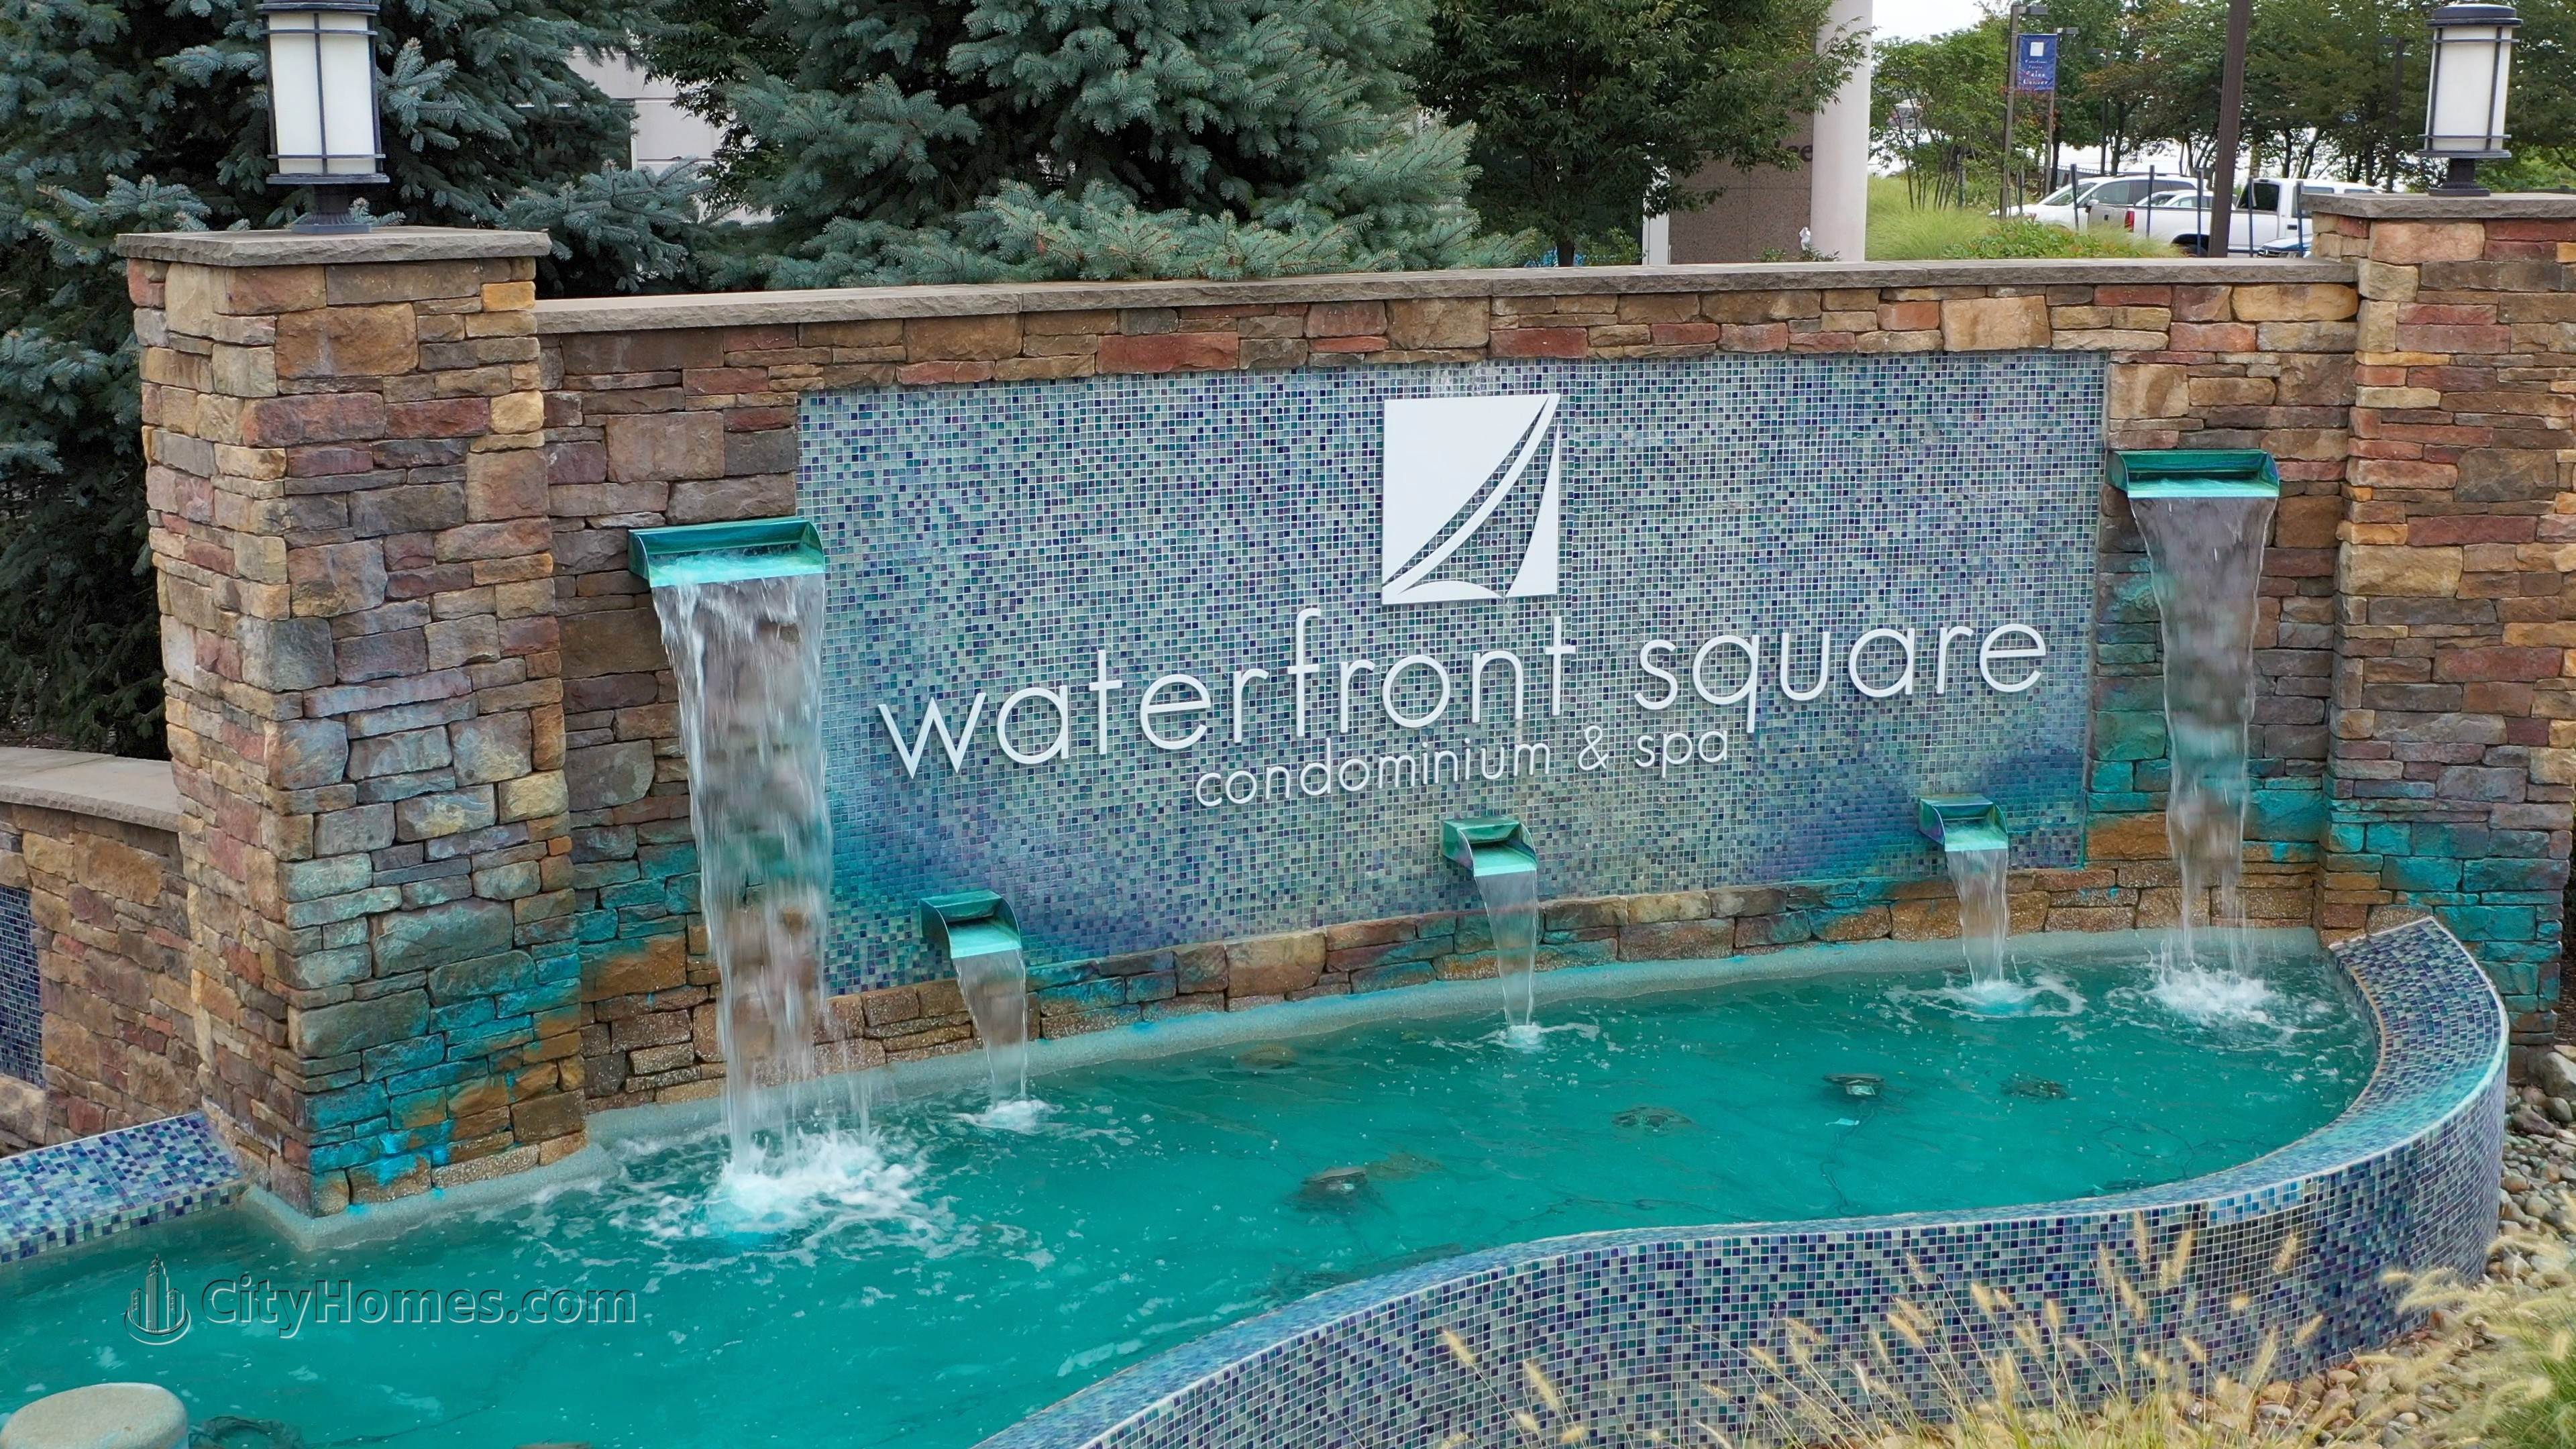 Waterfront Square xây dựng tại 901 N Penn St, Northern Liberties, Philadelphia, PA 19123